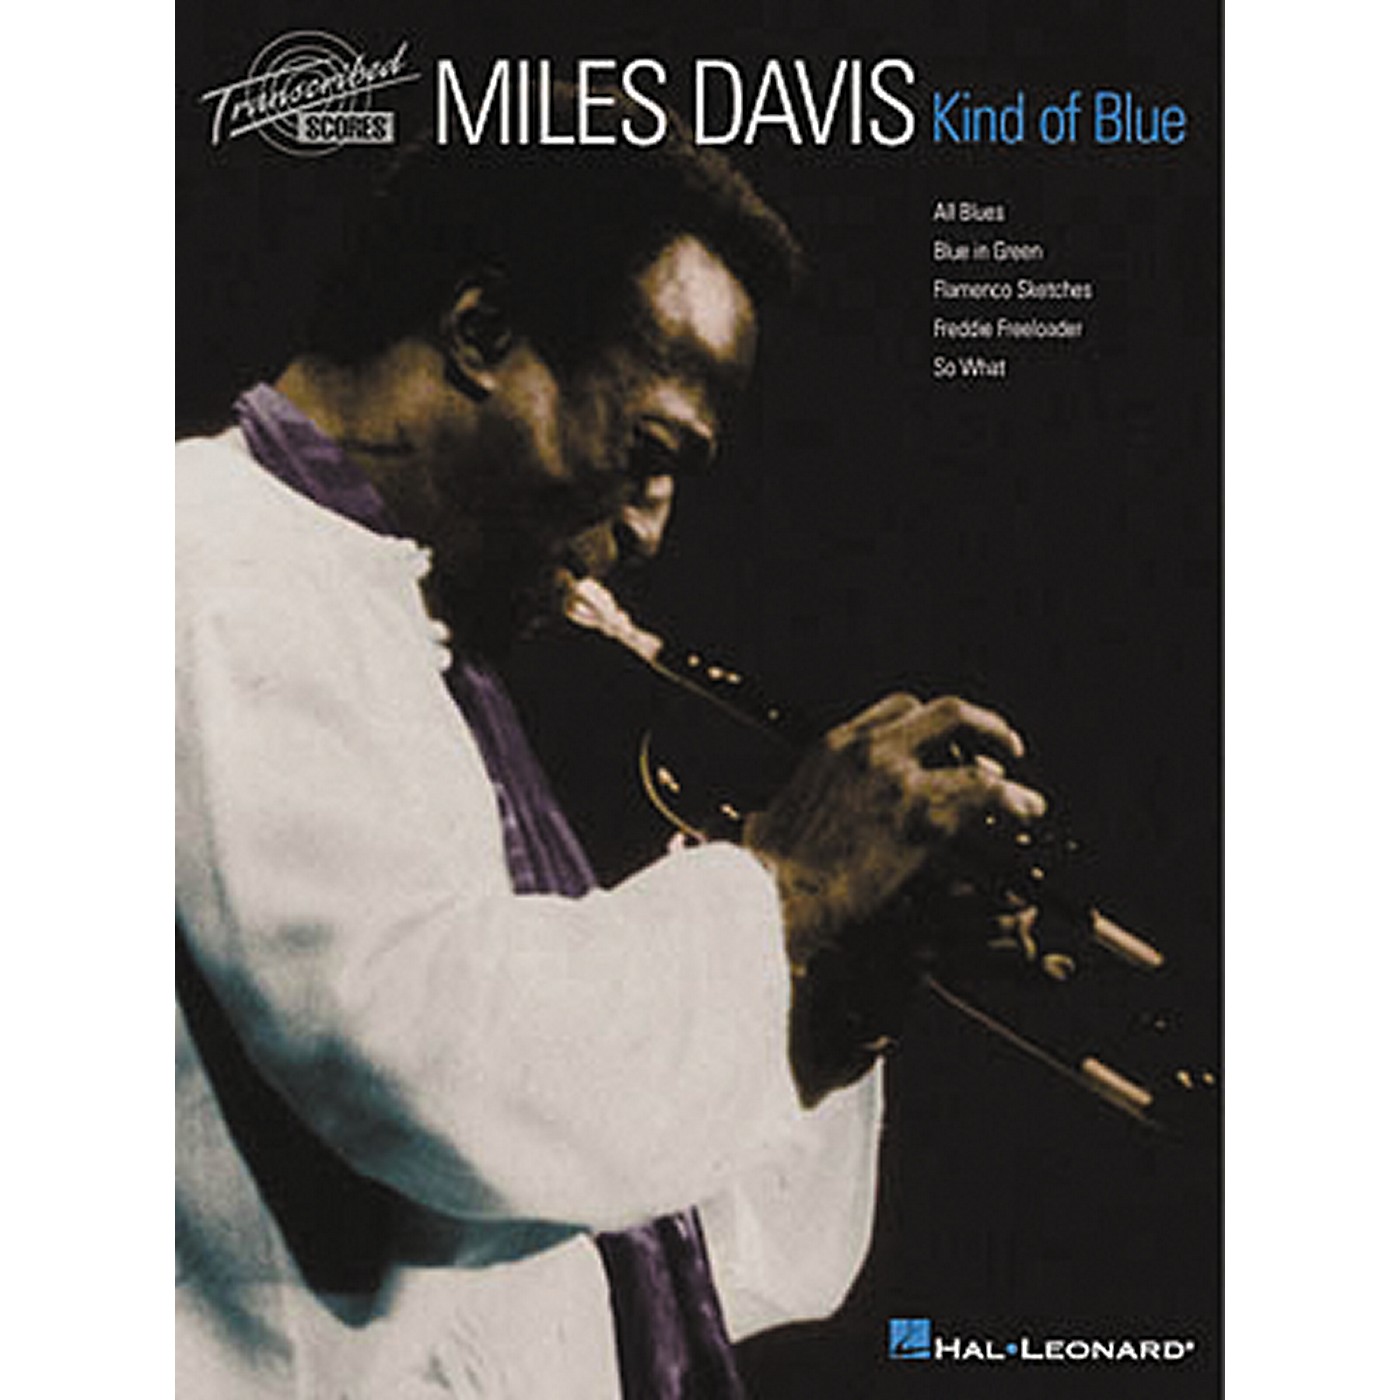 Hal Leonard Miles Davis - Kind of Blue Transcribed Score Book thumbnail